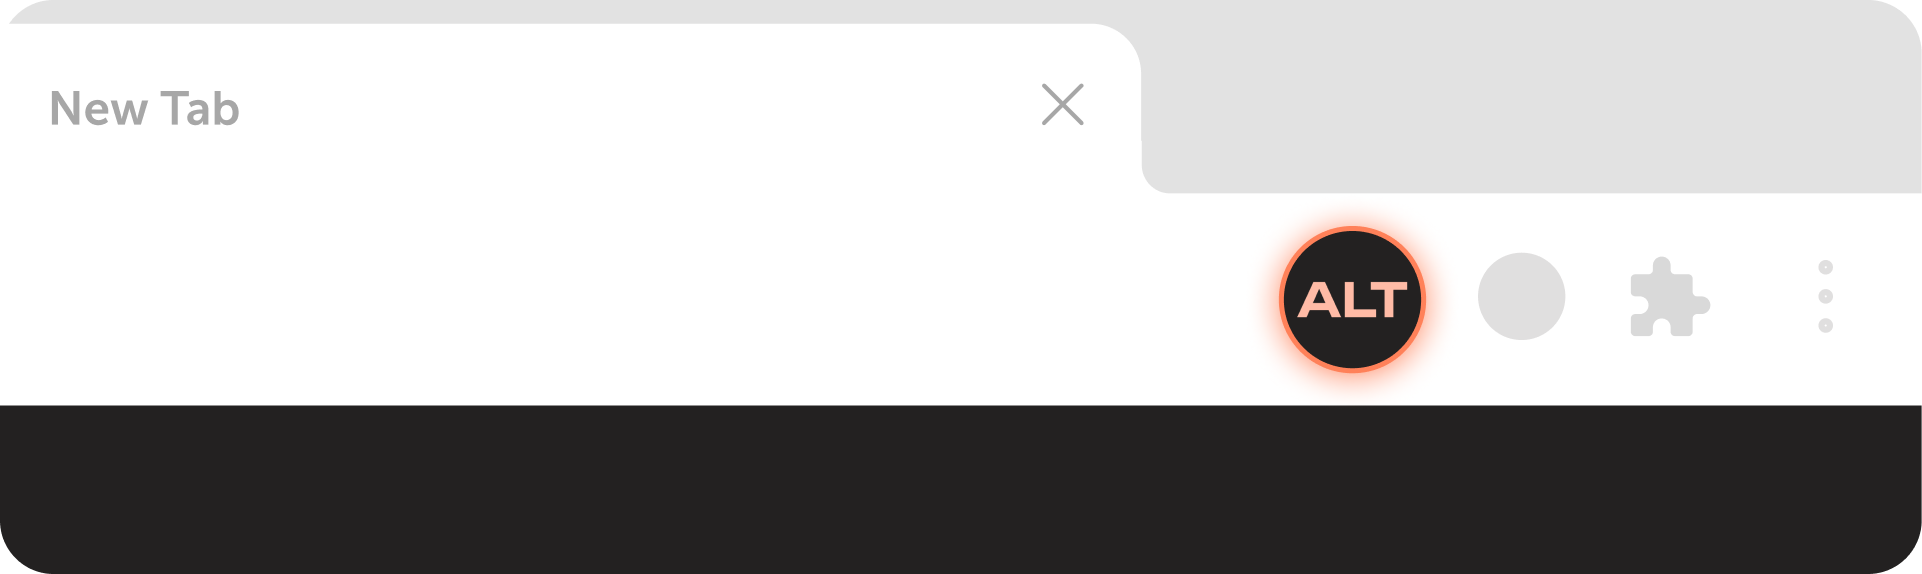 chrome browser task bar showing orange ALT AI icon